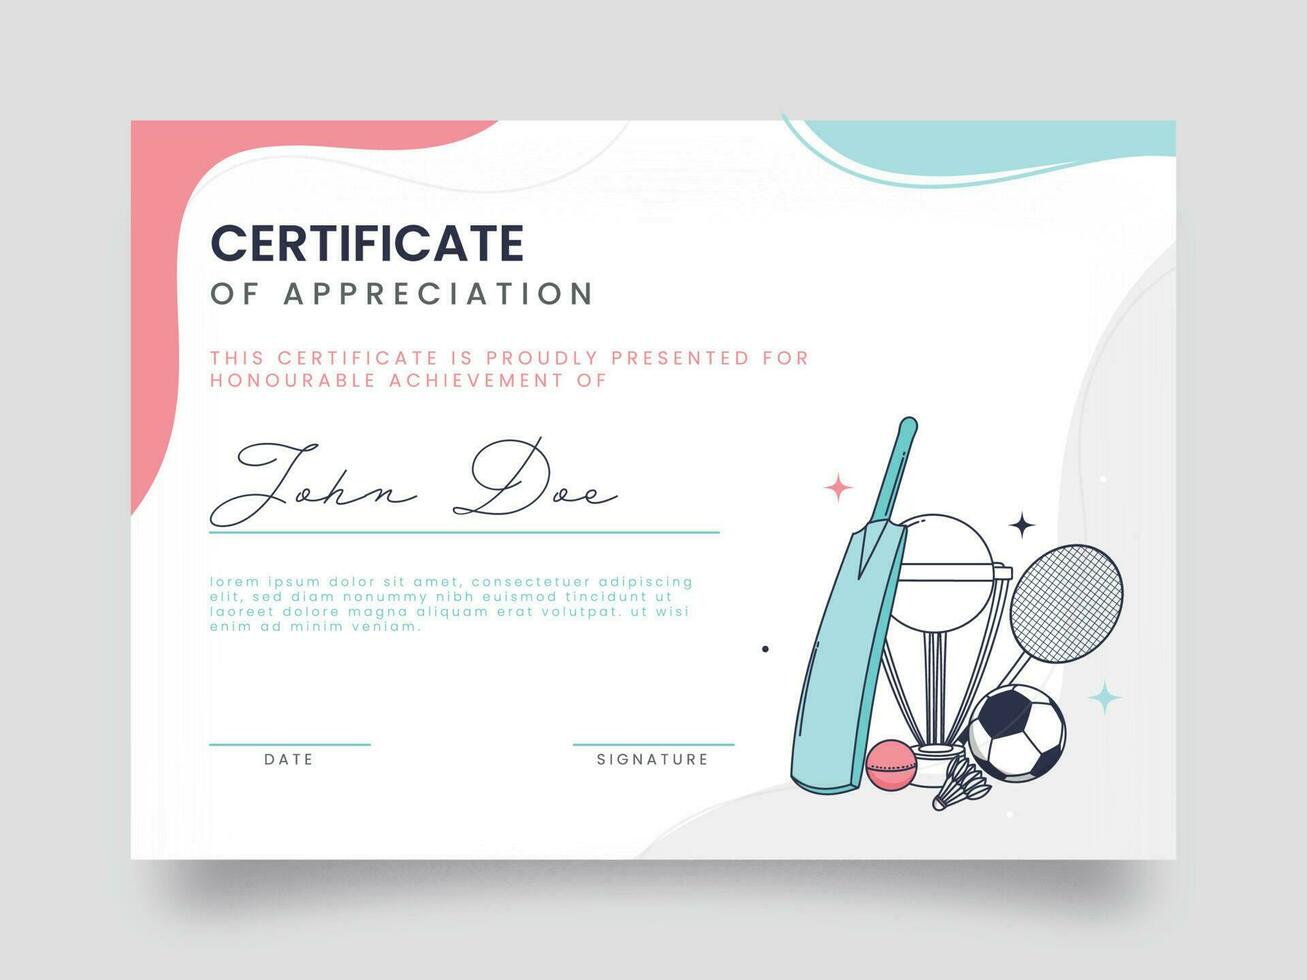 Certificate Of Appreciation Award Template Design For Sports. vector